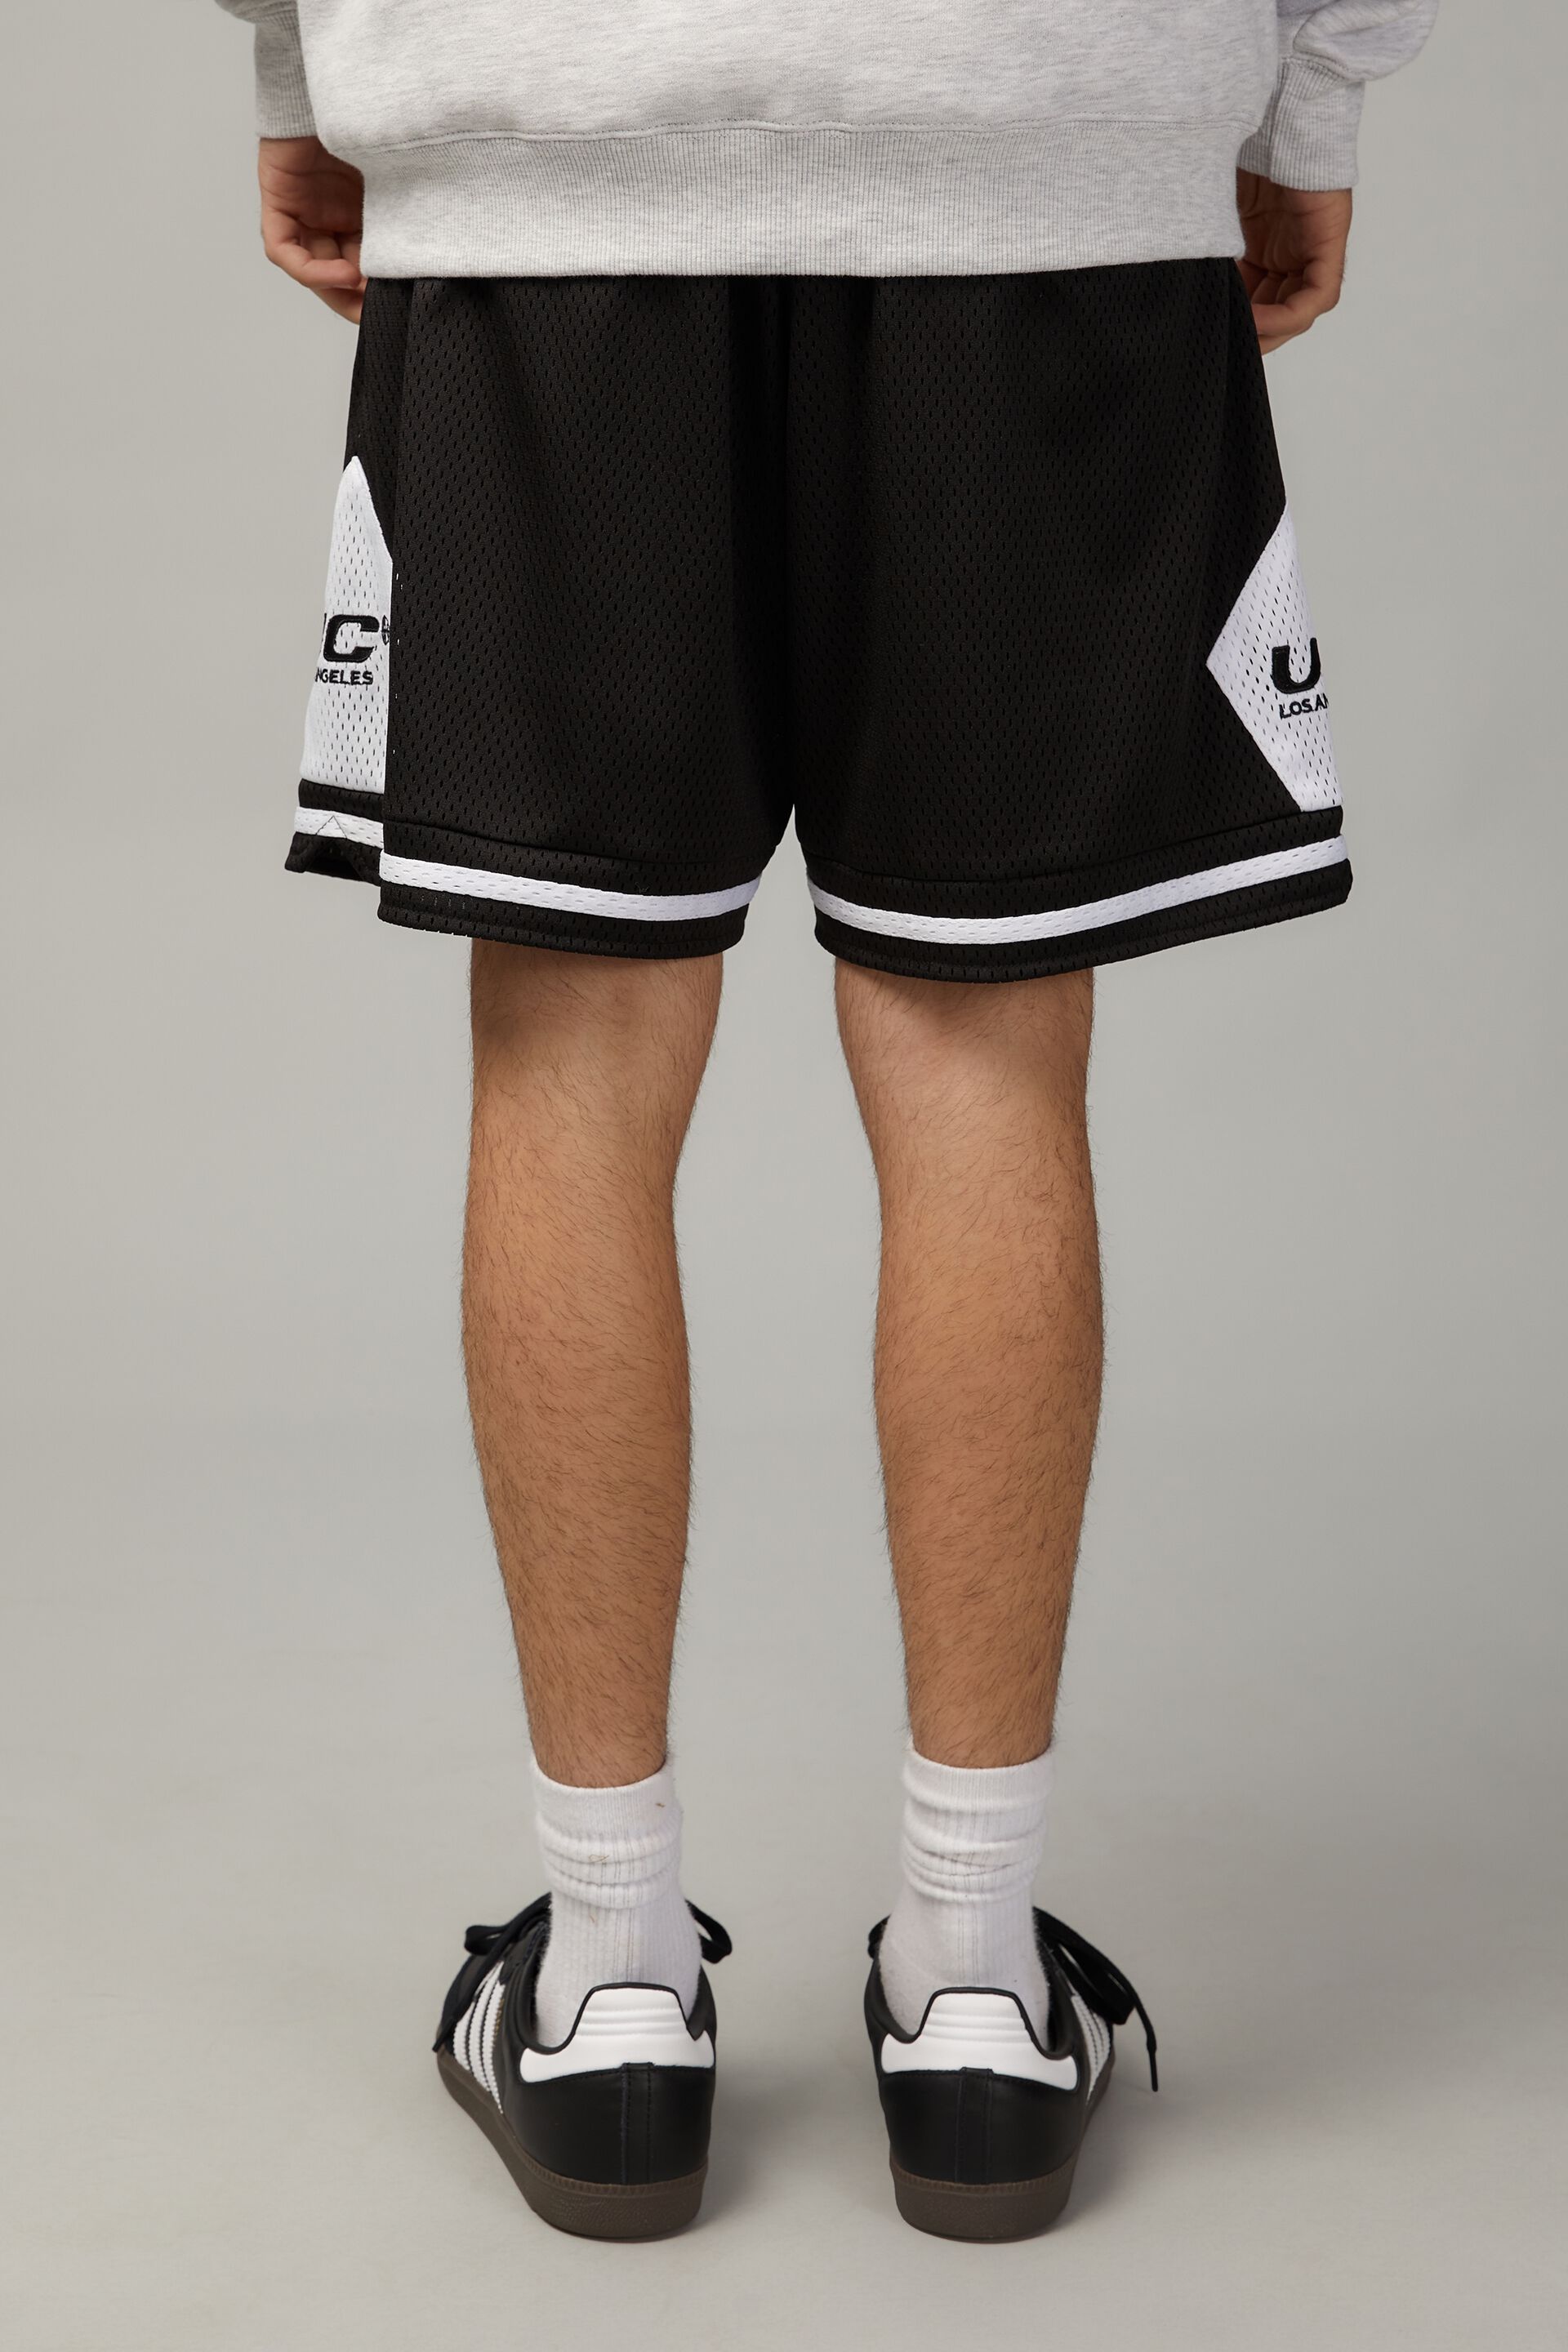 Rope Rival Basketball Shorts in Black | Hallensteins NZ